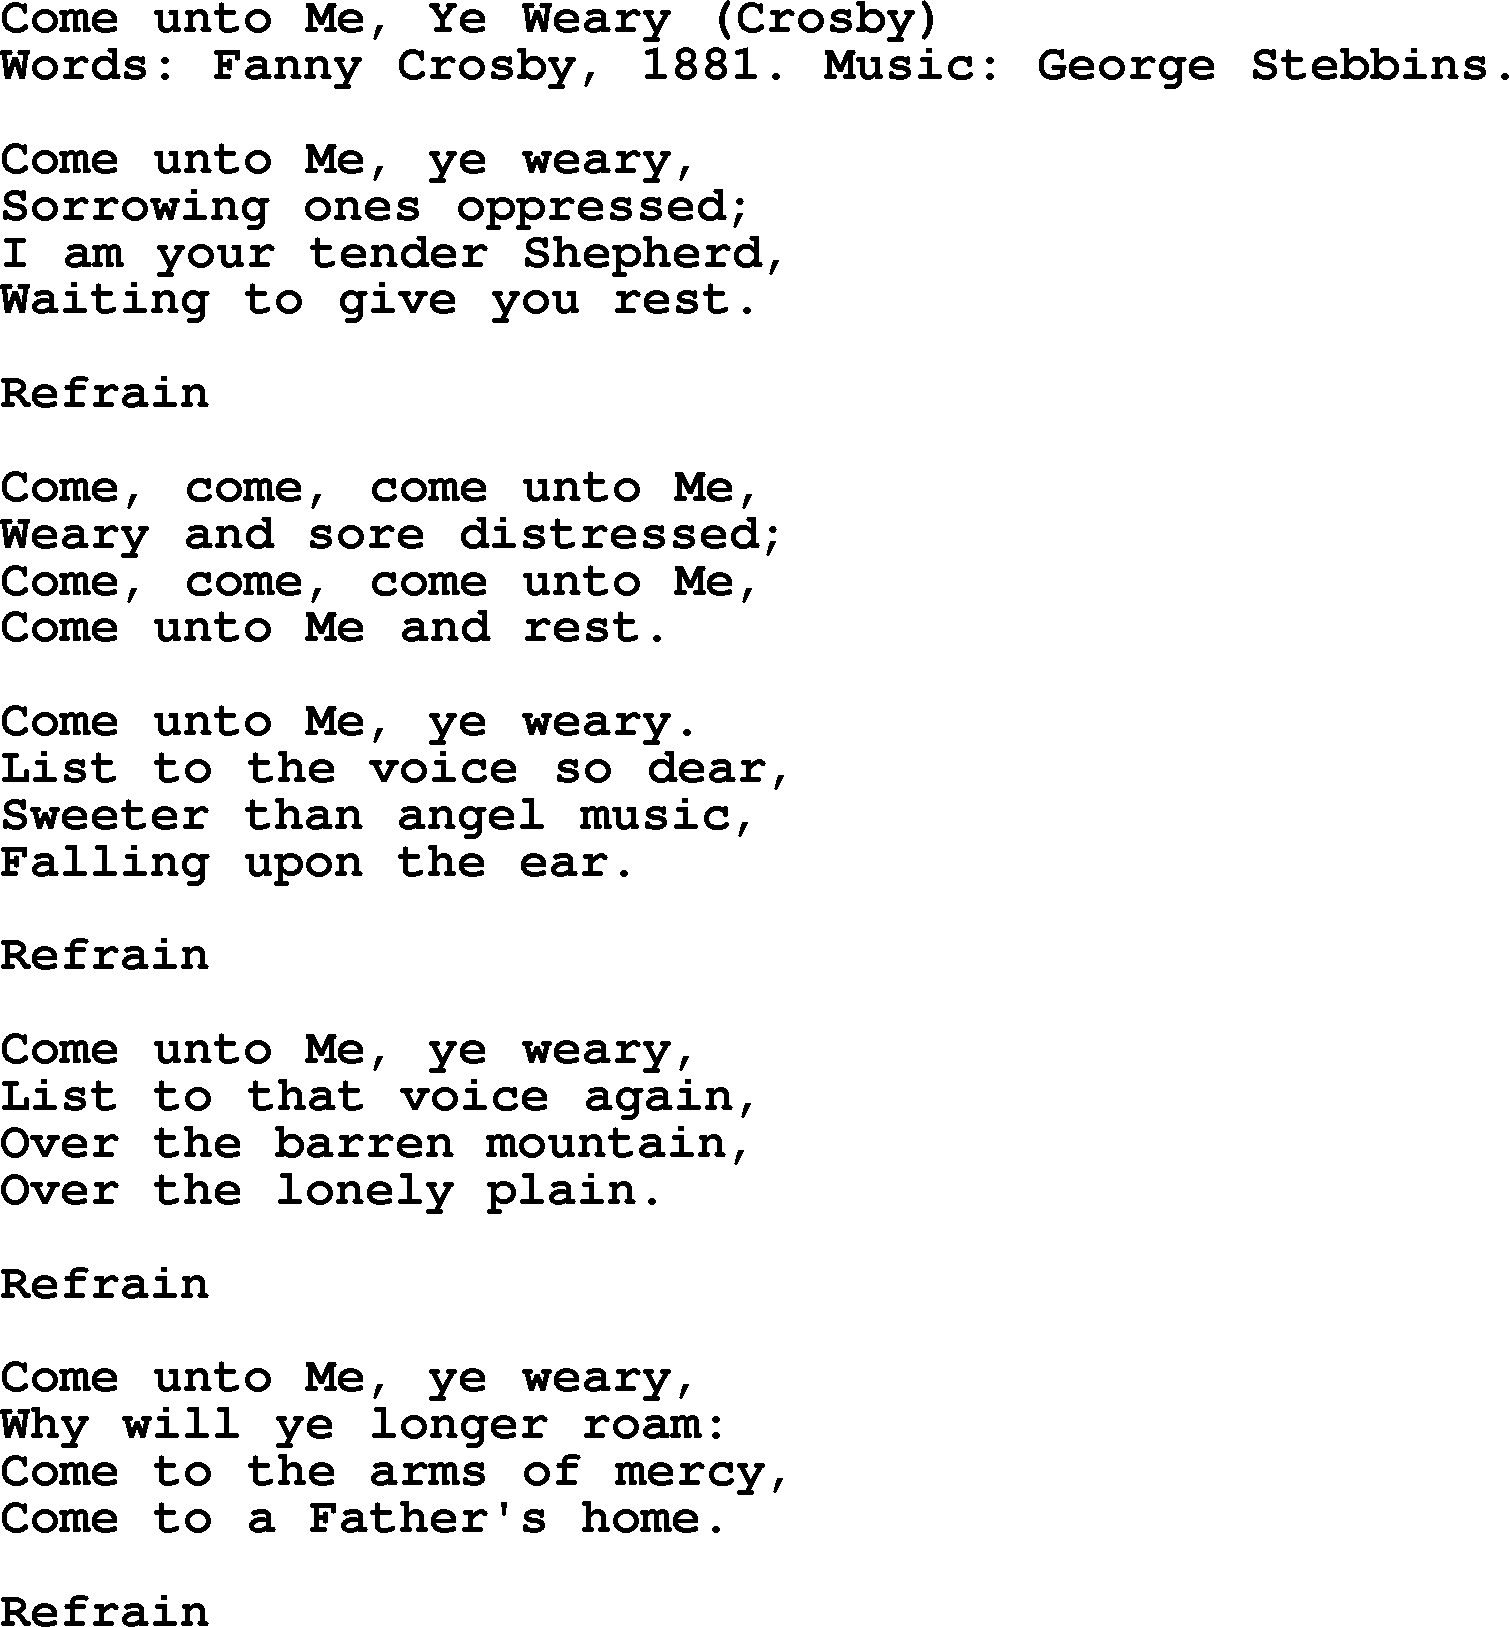 Fanny Crosby song: Come Unto Me, Ye Weary, lyrics